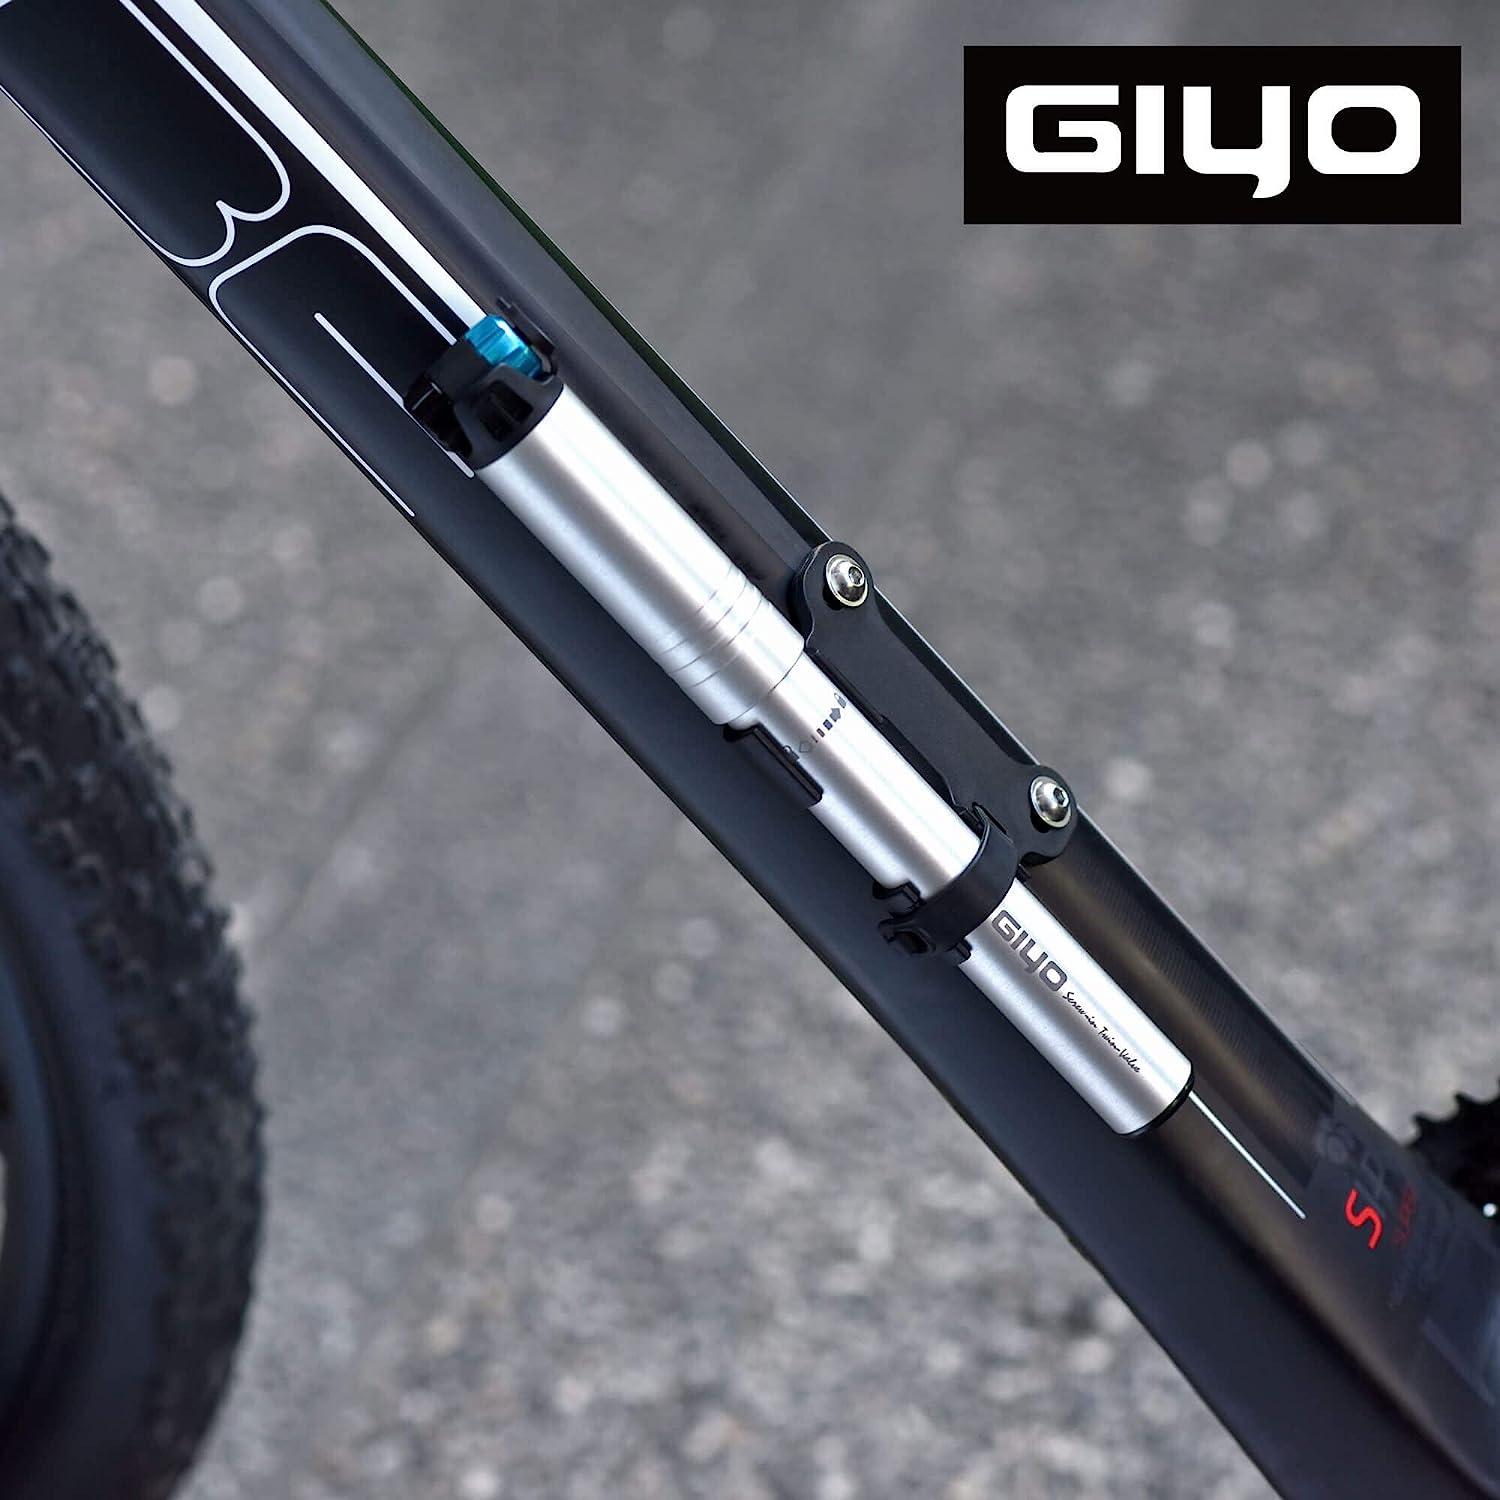  GIYO Mini Bike Pump, Portable Compact Bicycle Pump